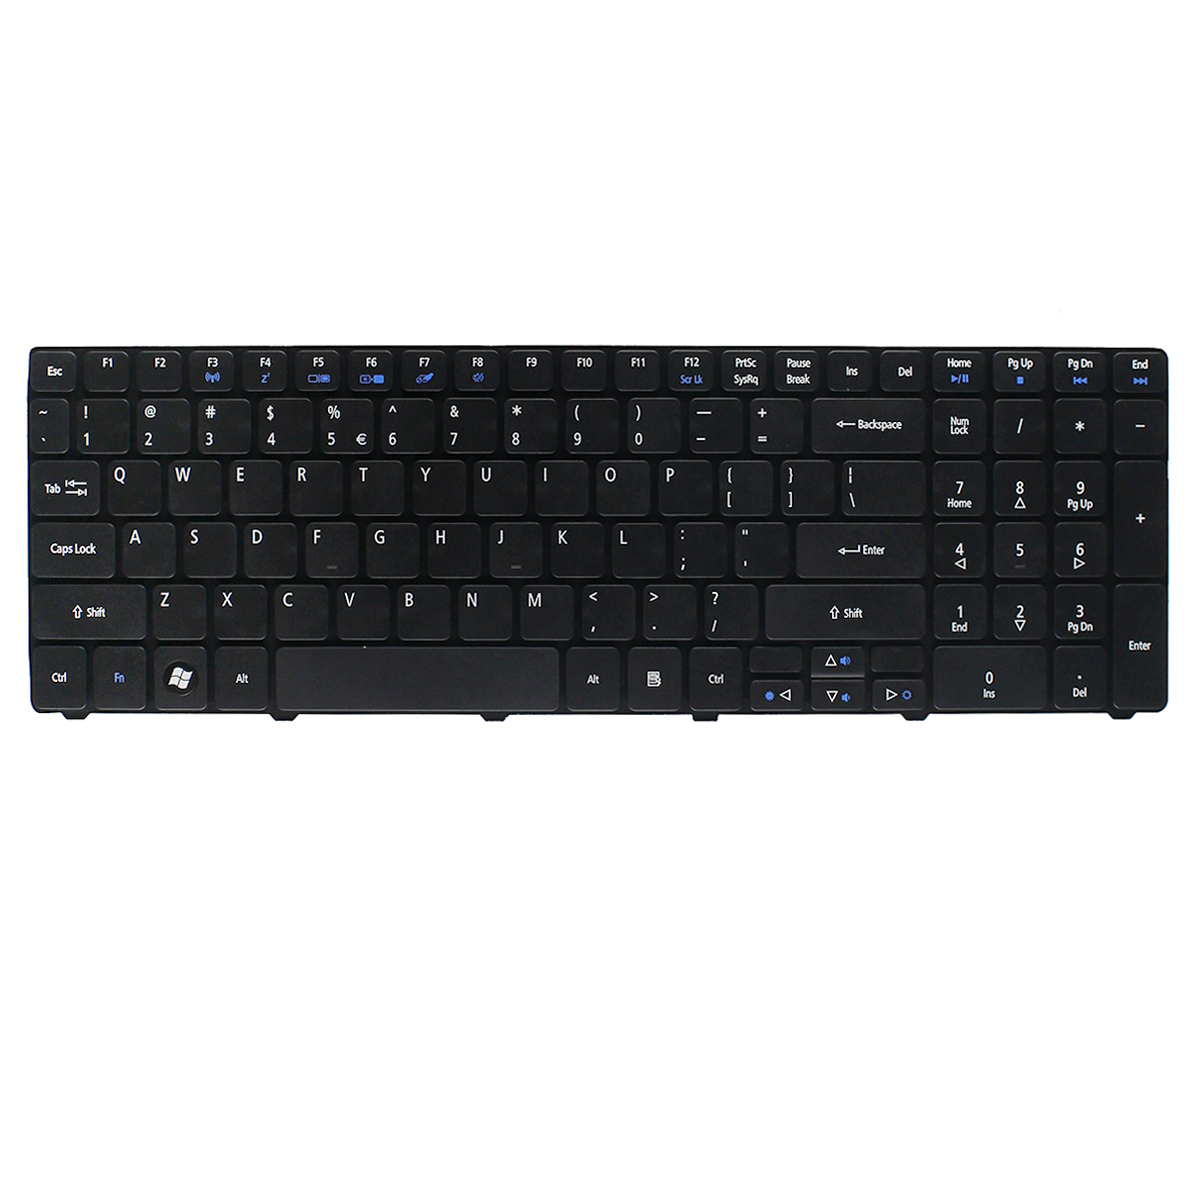 New Keyboard for Acer Aspire 5733 5733Z 5749 5749Z 5759 7560 La